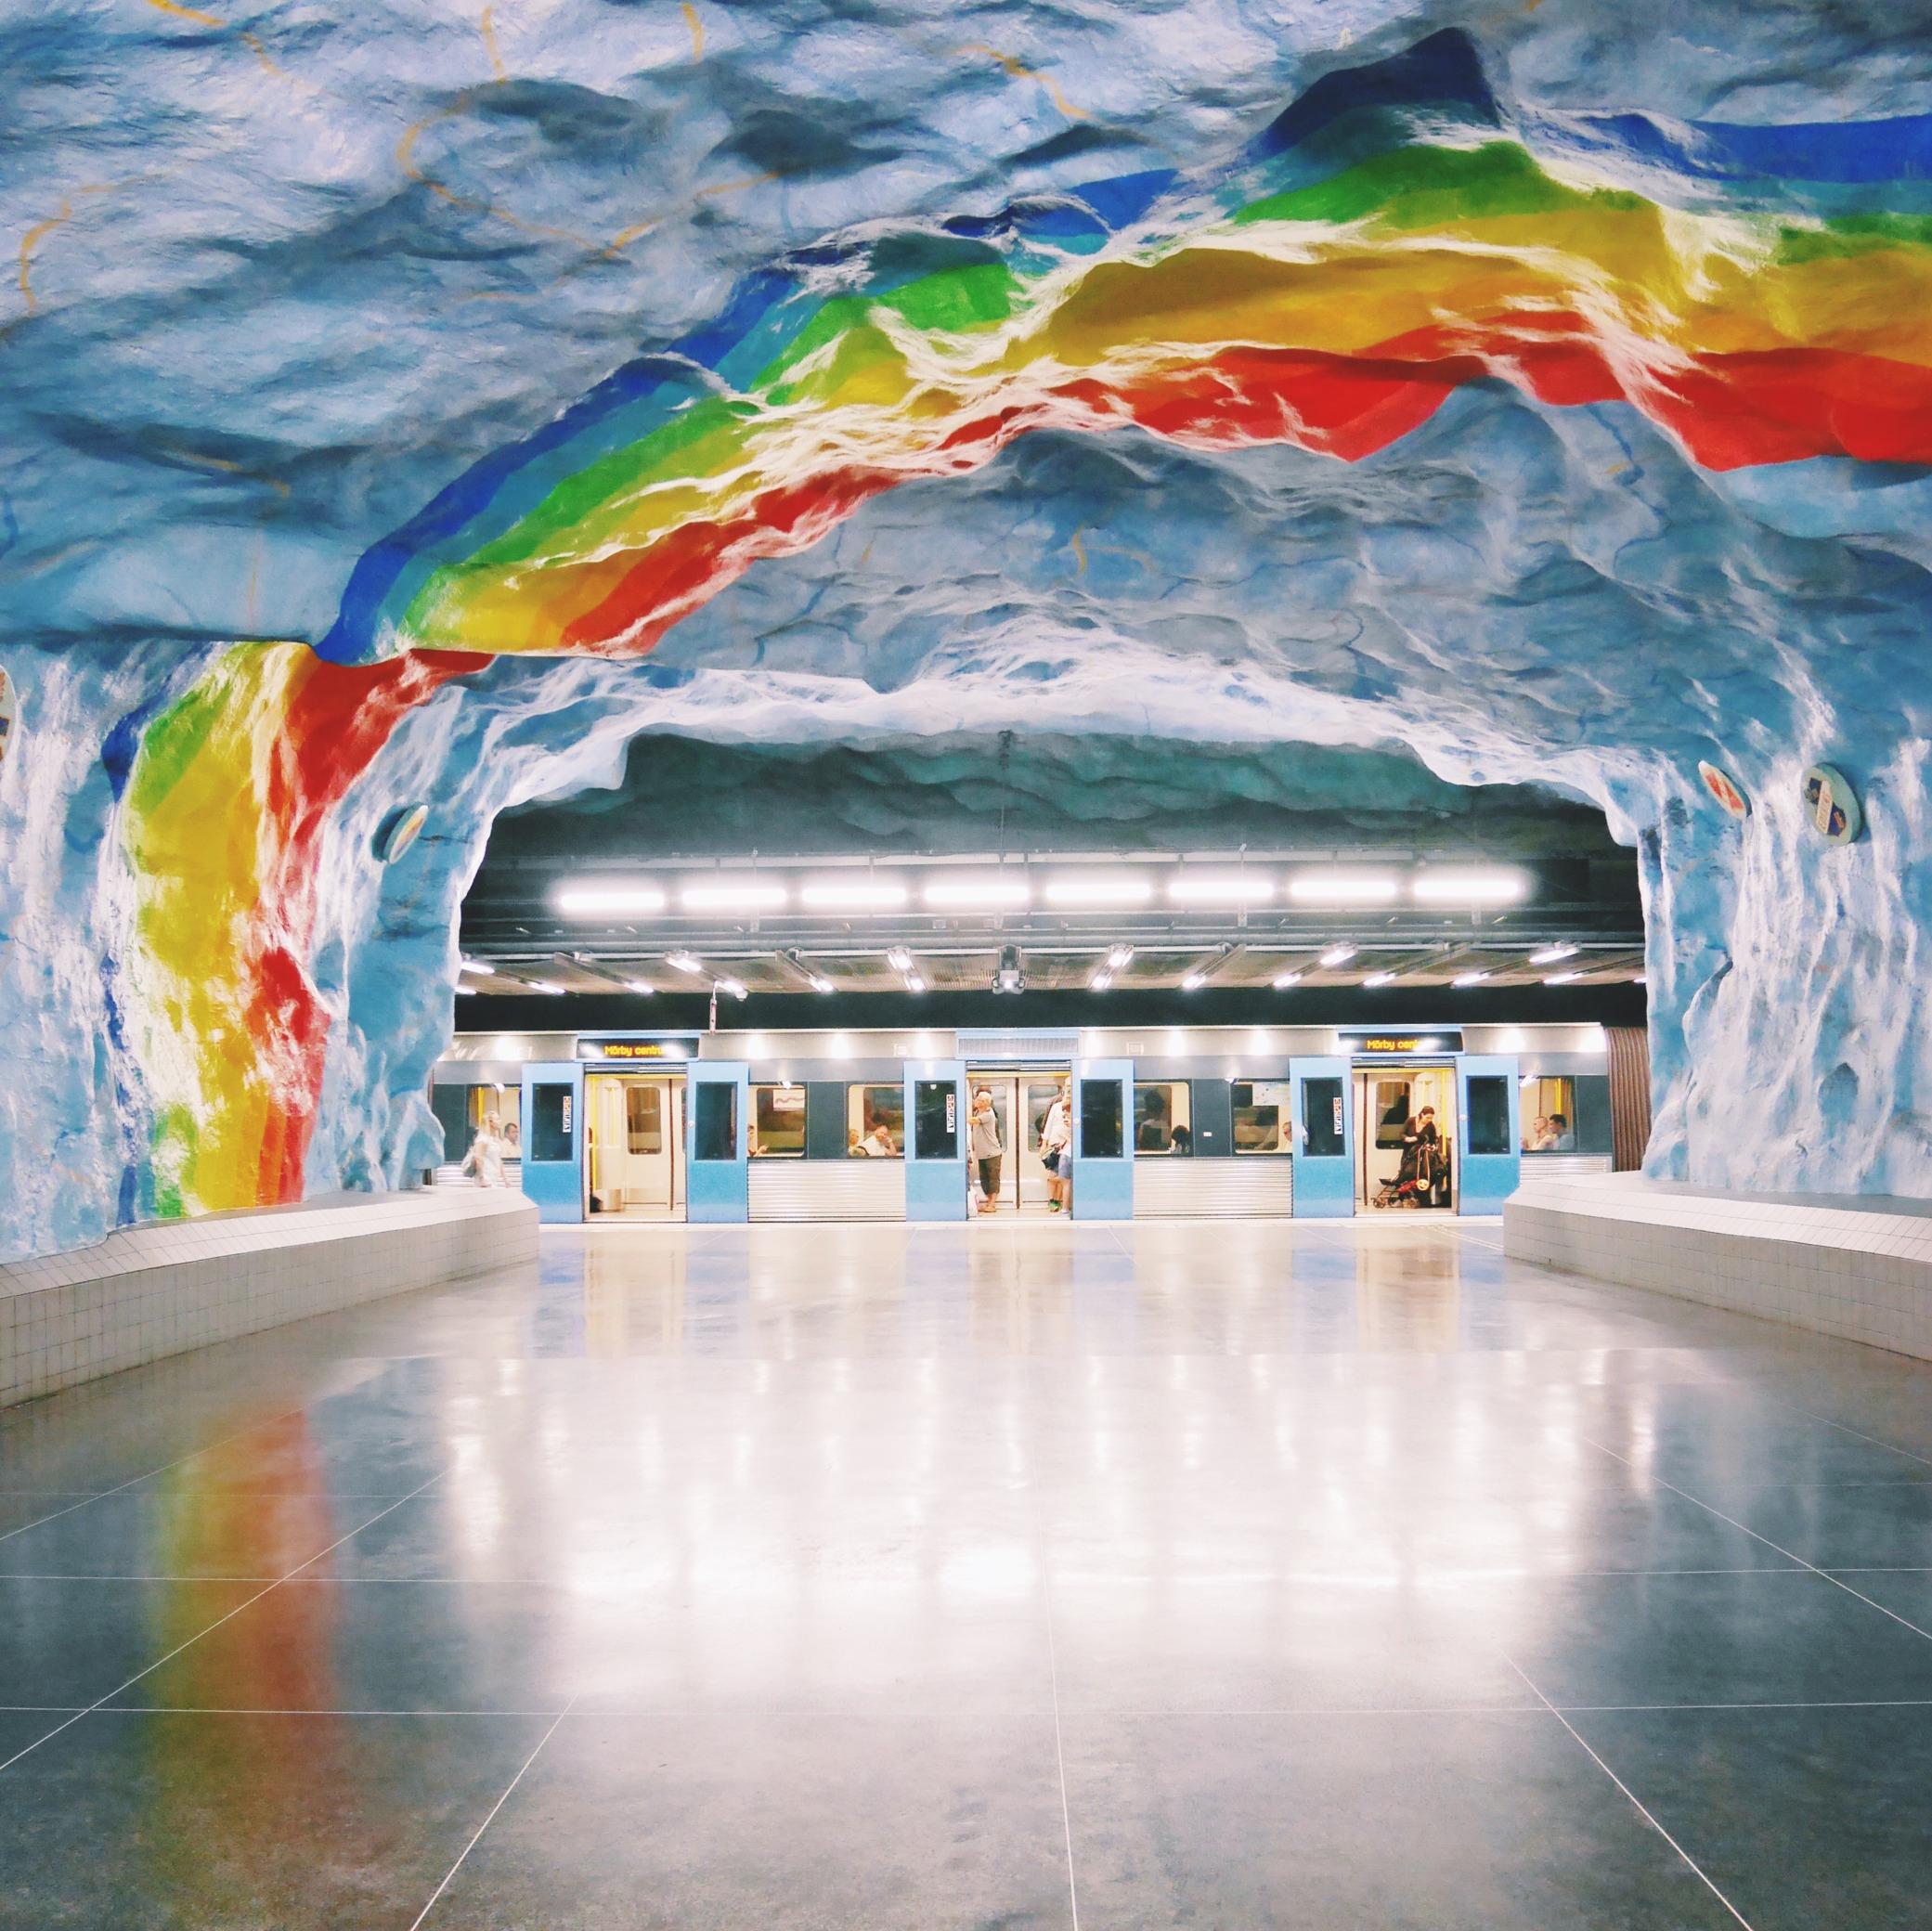 Rainbow subway art in Stockholm's Stadion station